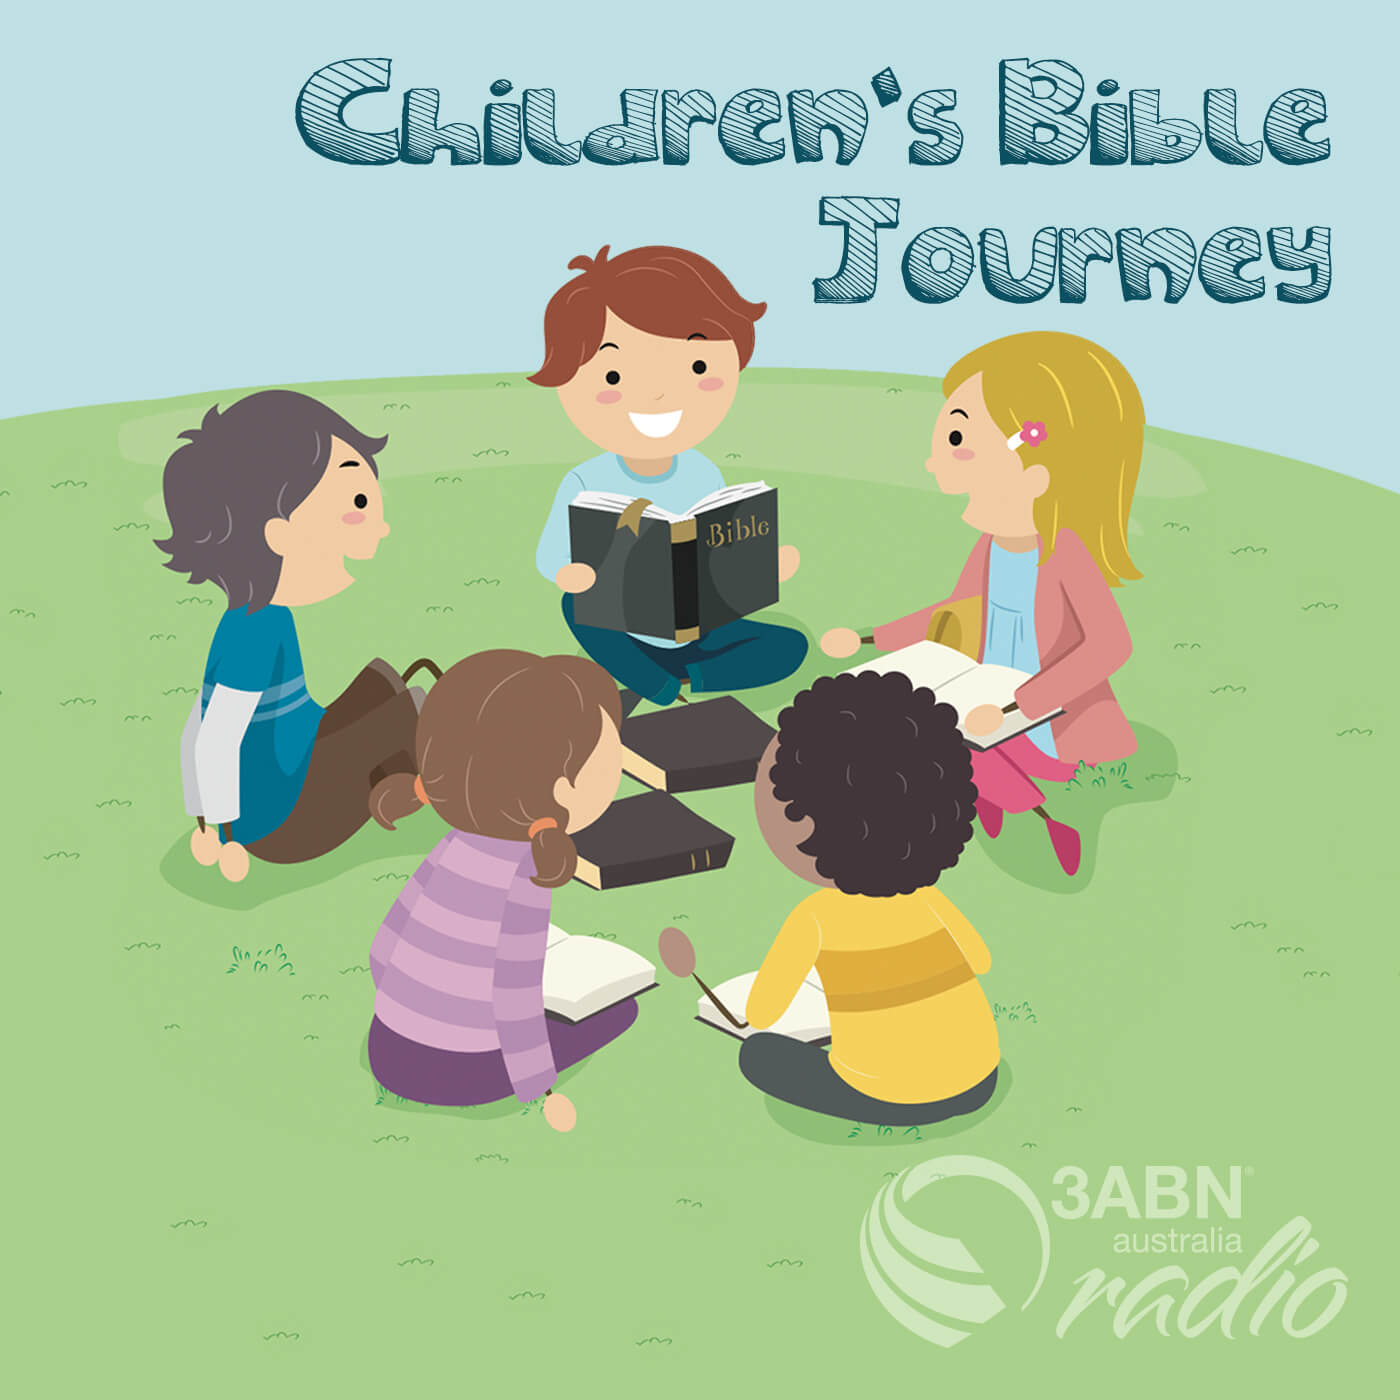 Children's Bible Journey - 2180